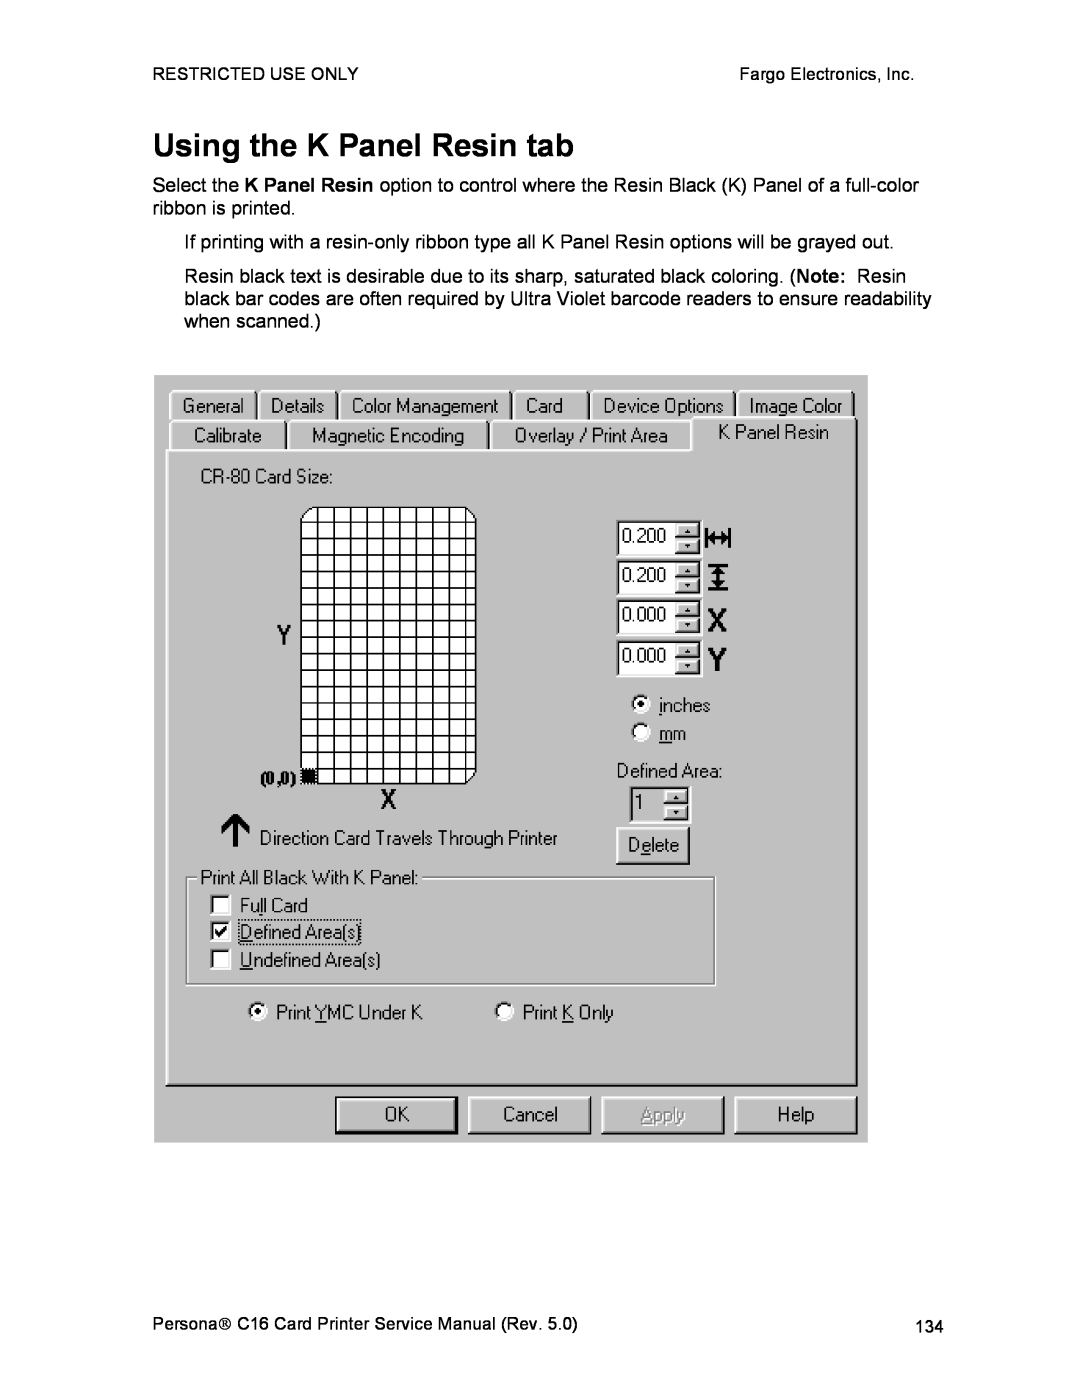 FARGO electronic C16 service manual Using the K Panel Resin tab 